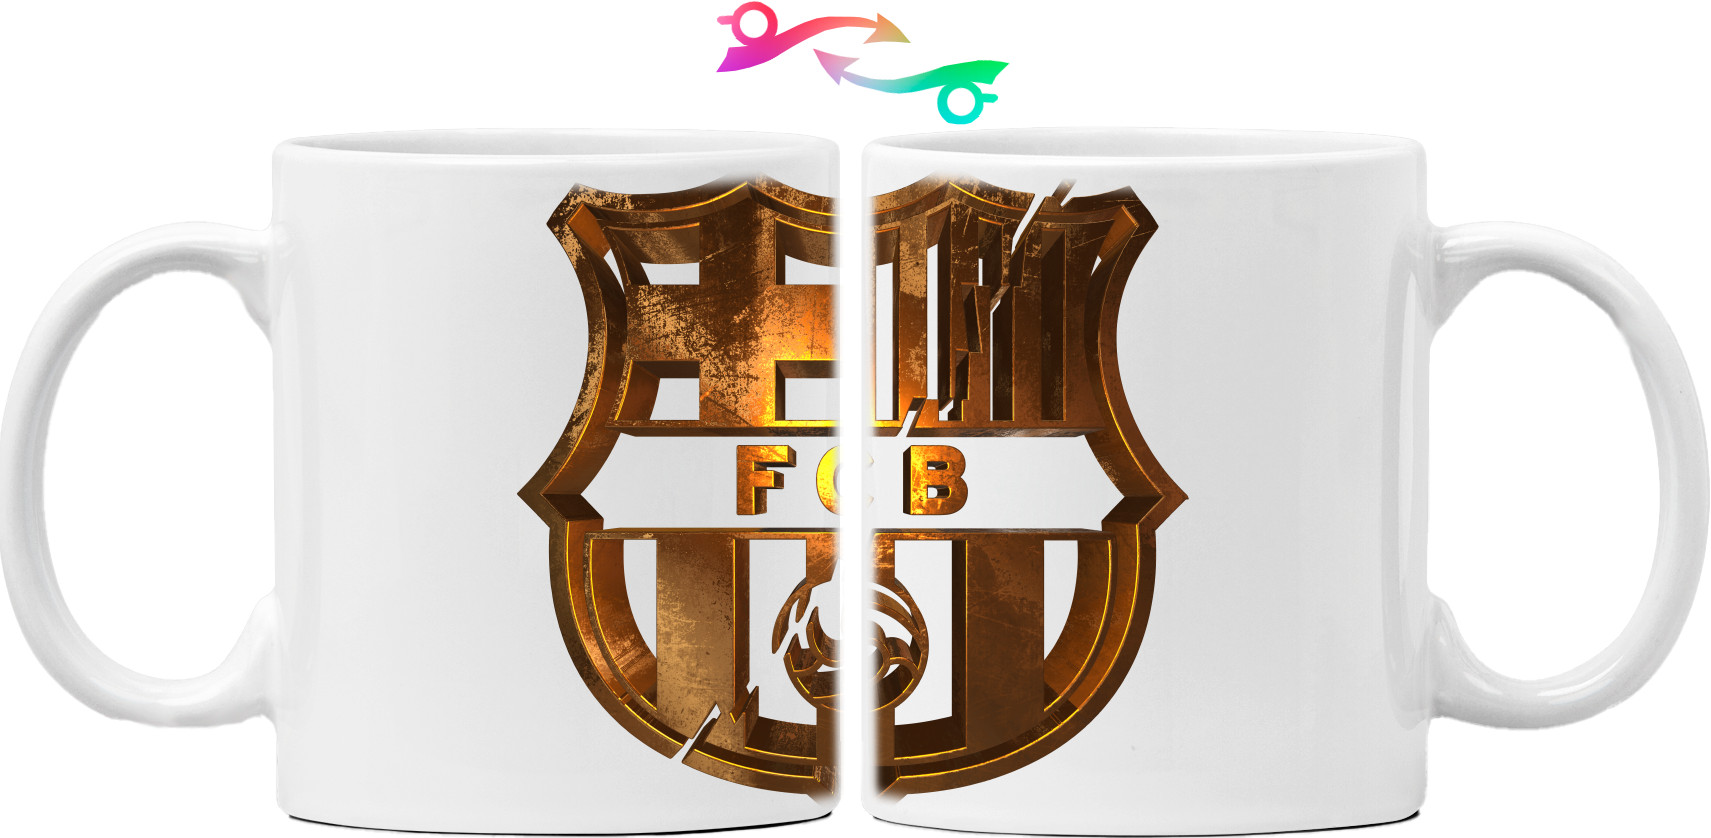 ФК Барселона gold